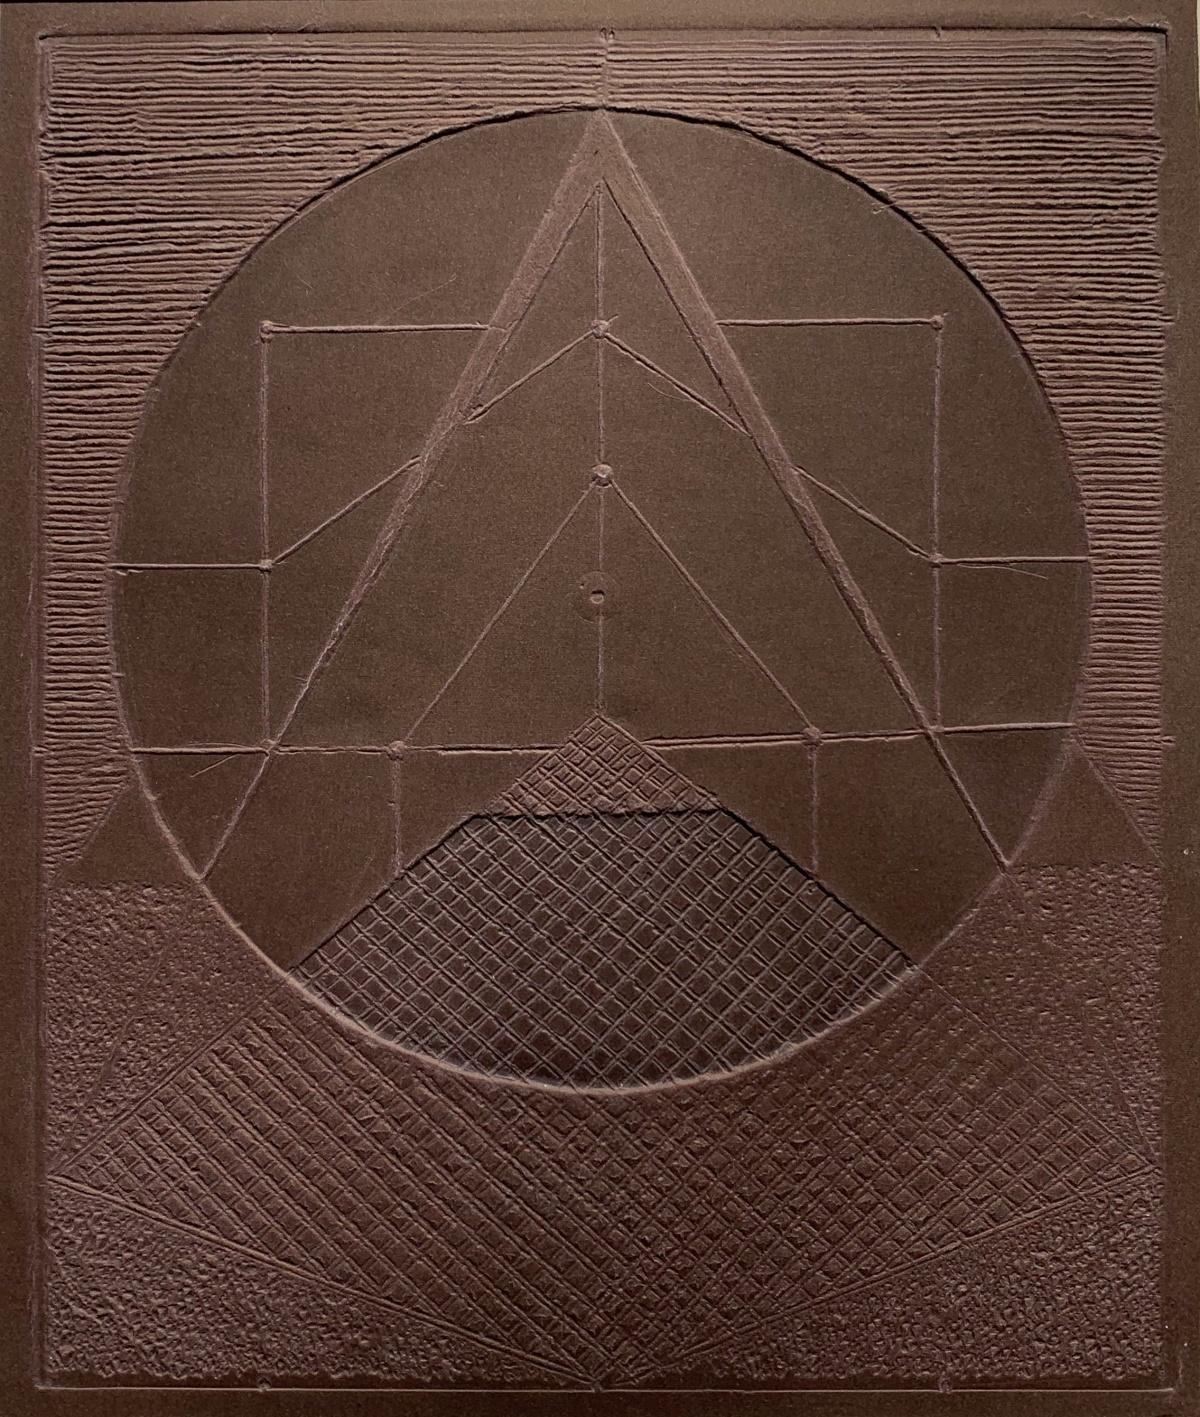 Ryszard Gieryszewski Abstract Print - Relief I - XXI Century, Contemporary abstract graphics, Geometric shapes, 